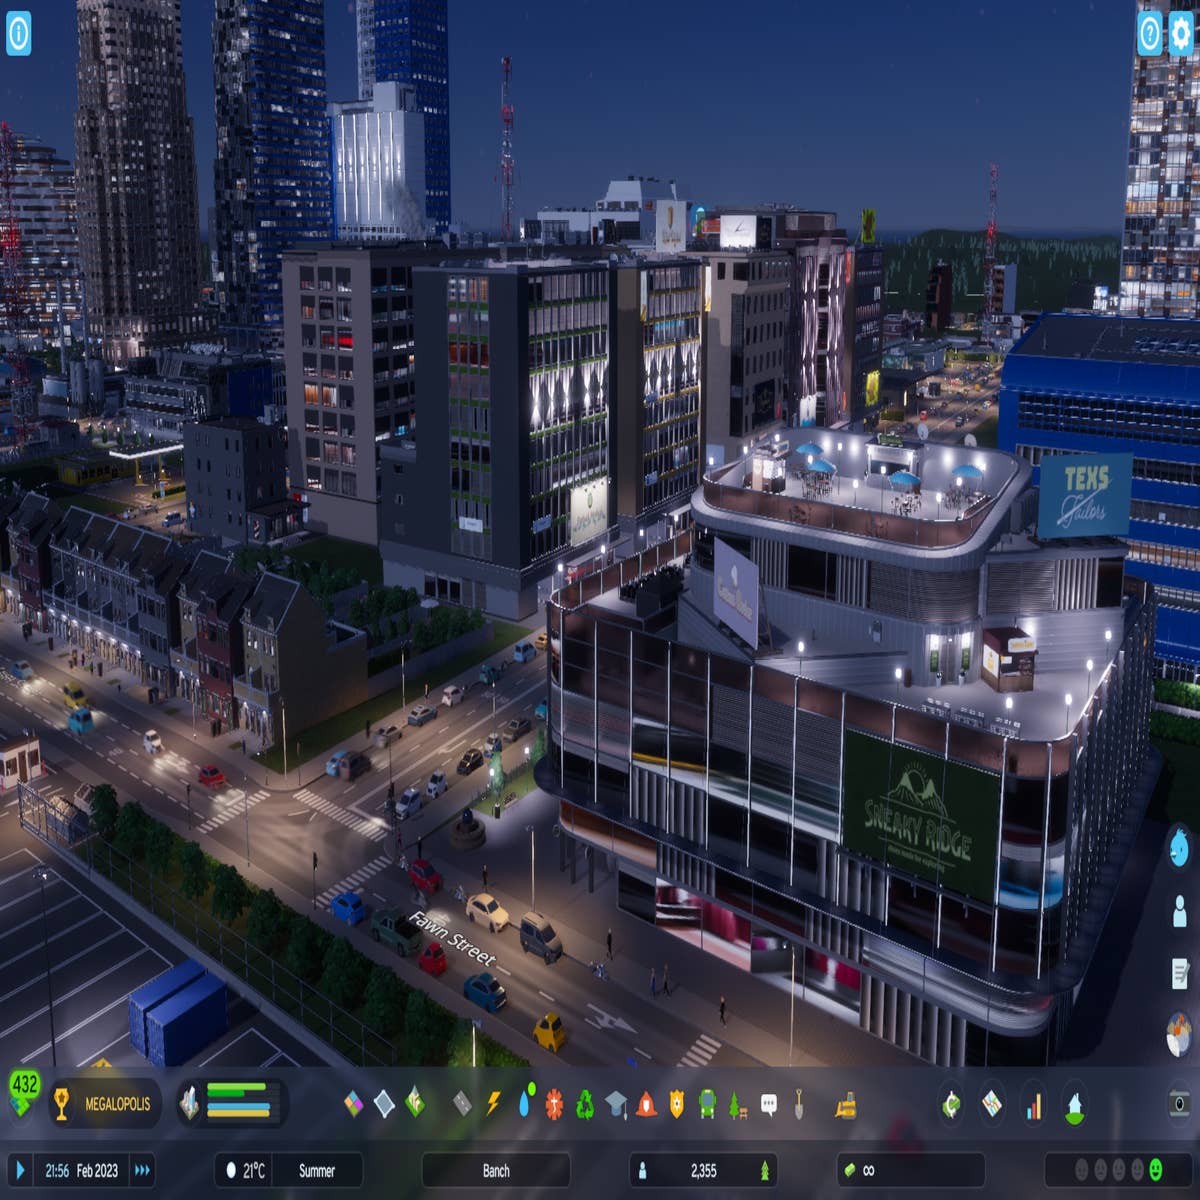 Cities Skylines 2 Gameplay 